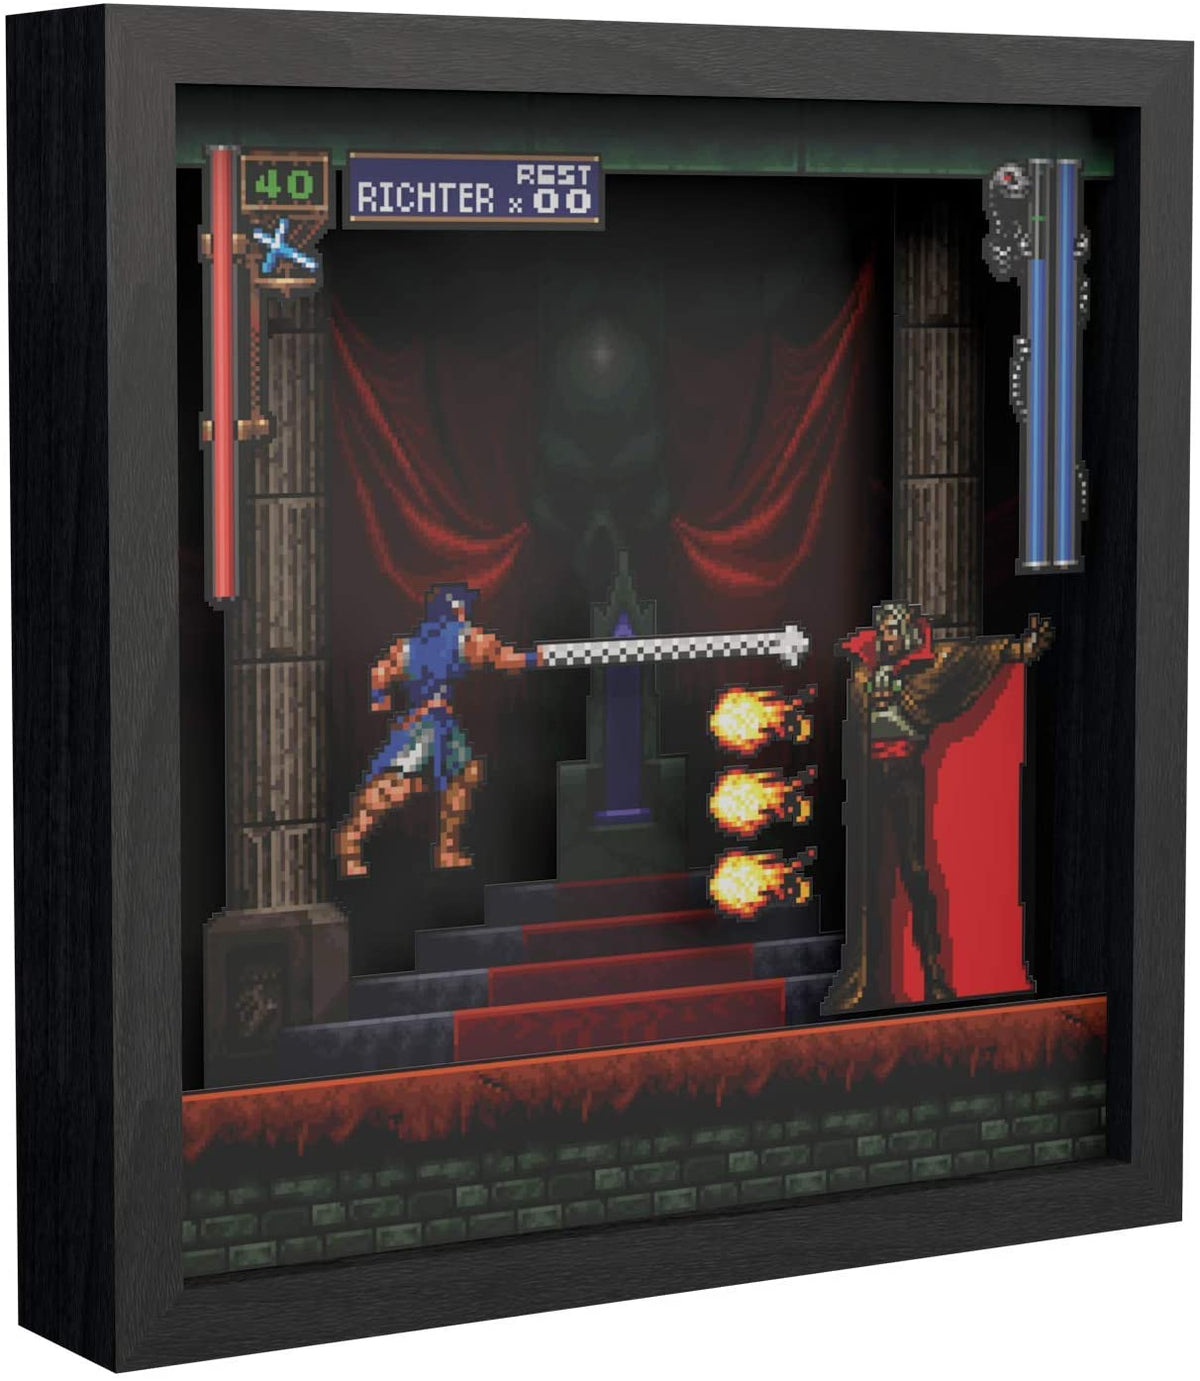 Pixel Frames - Castlevania intro Dracula Gamesellers.nl